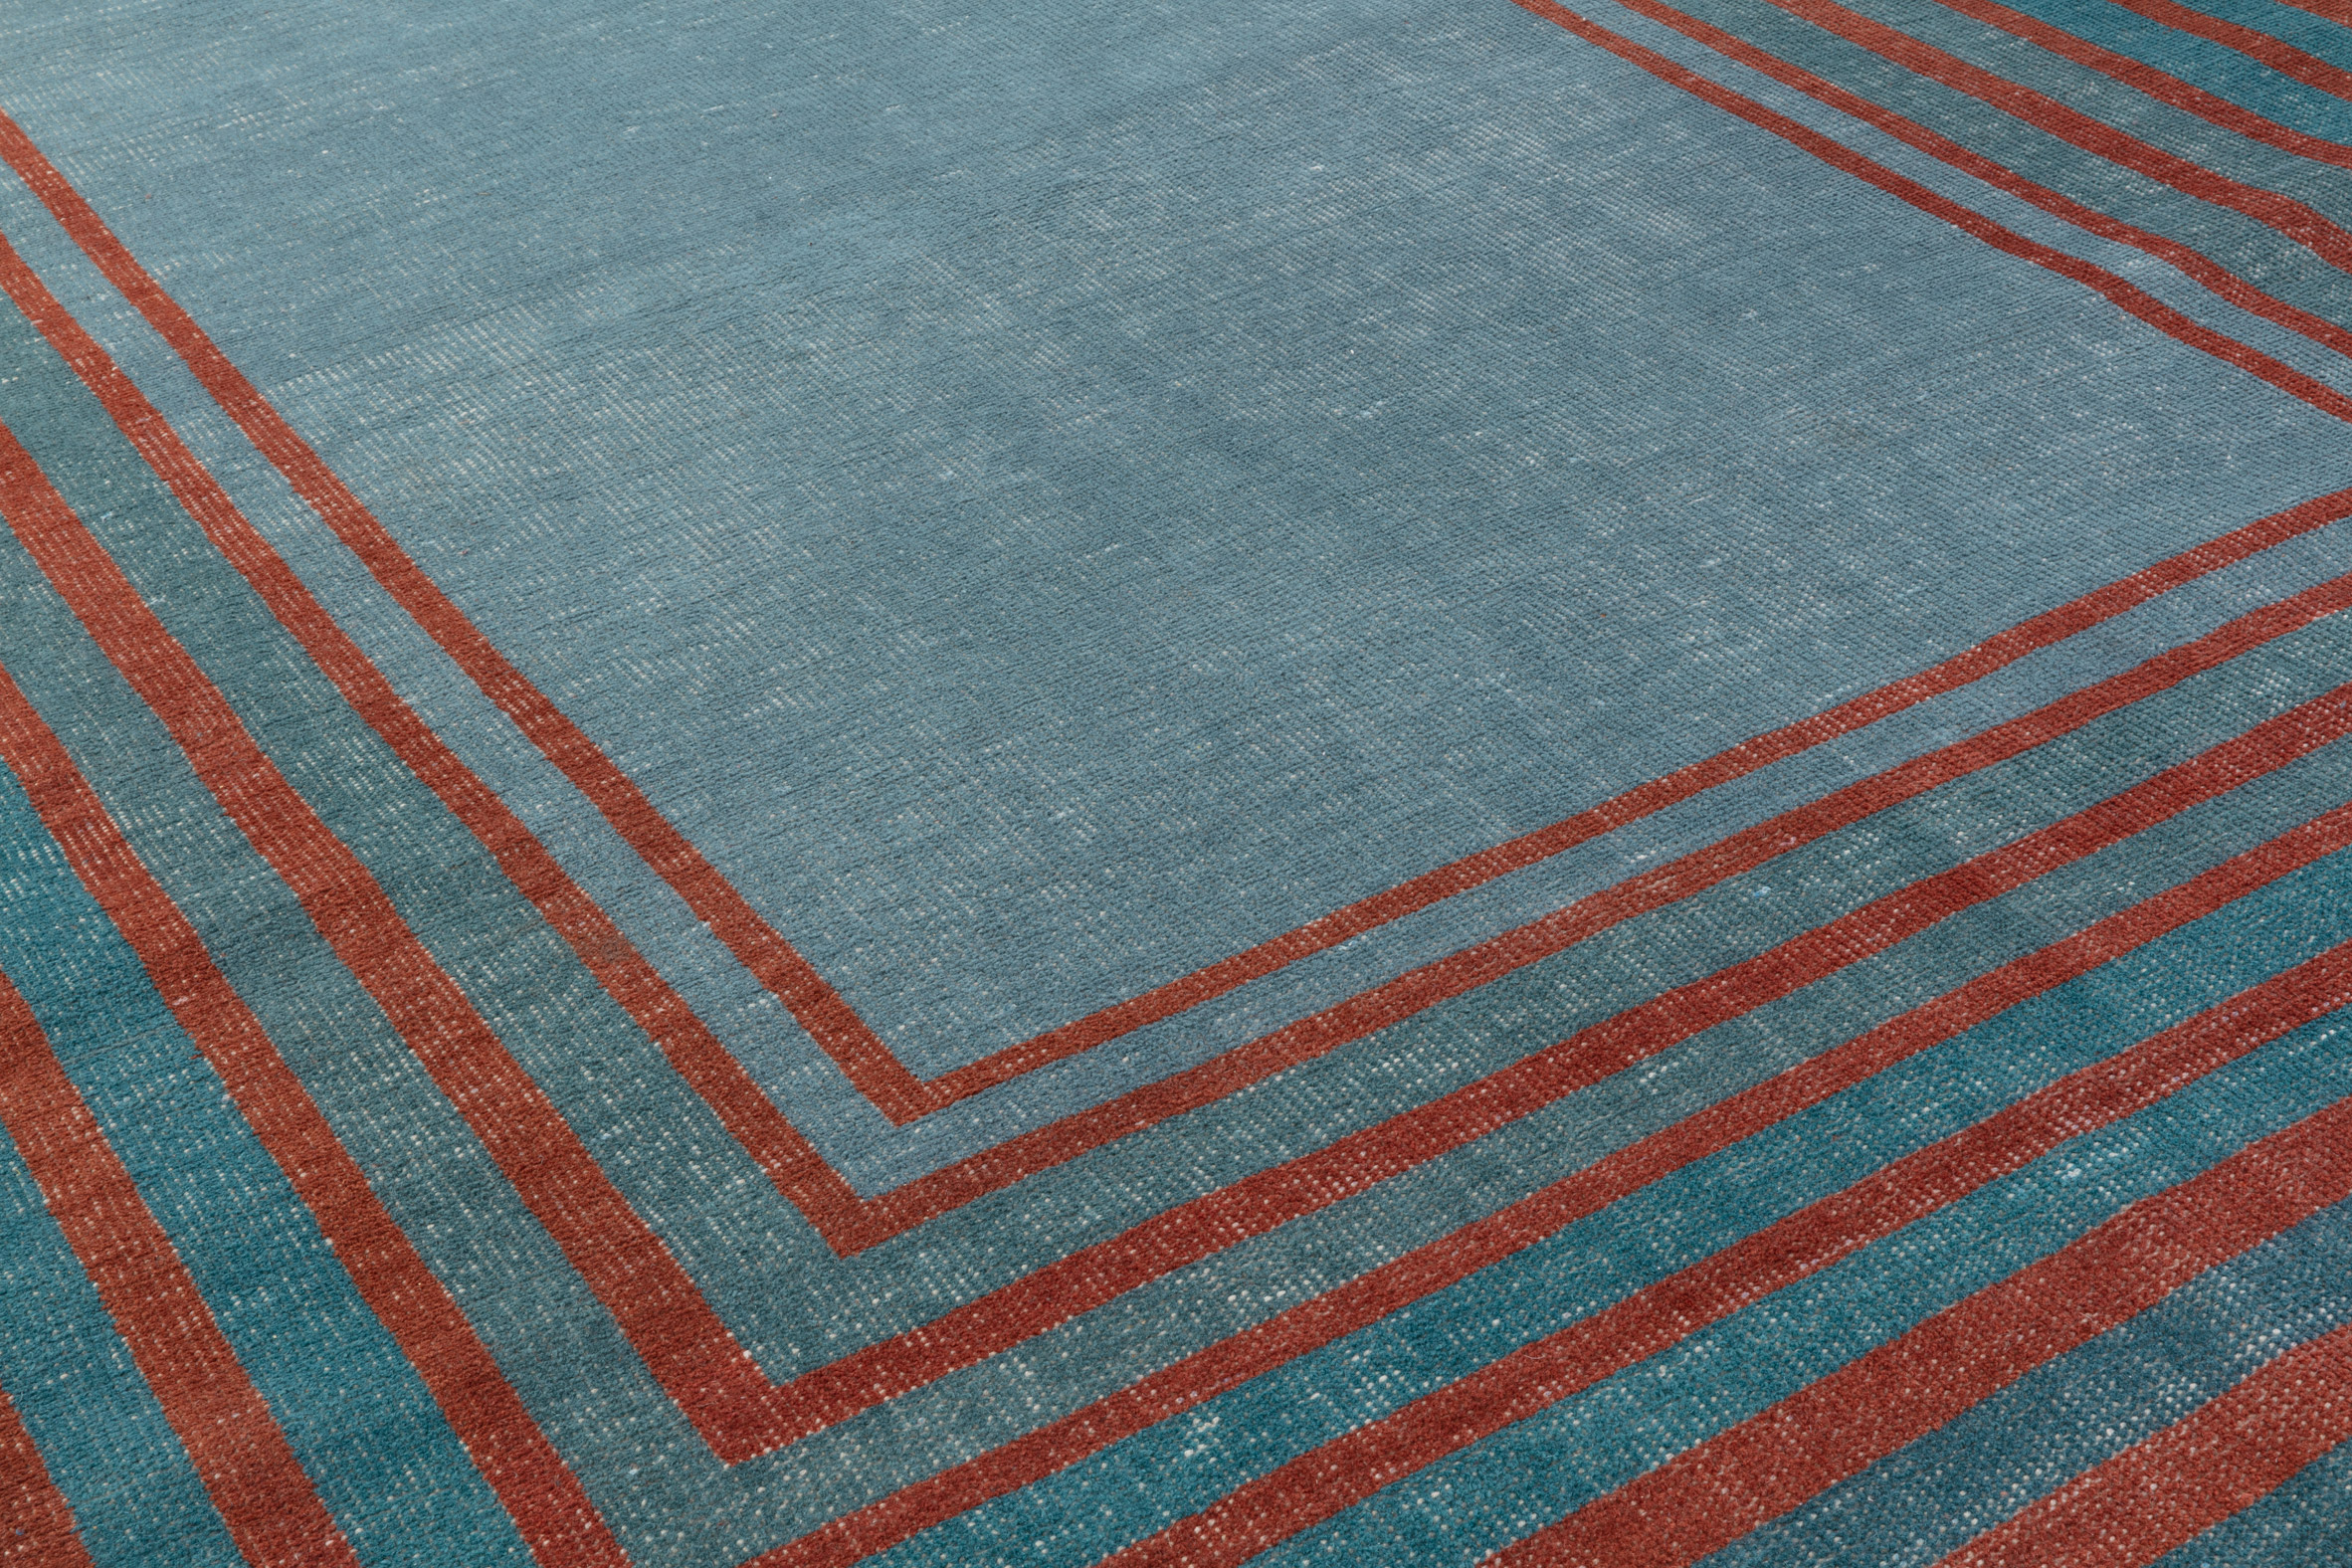 Sebastian Wrong designs modular "community of rugs" for Floor_Story